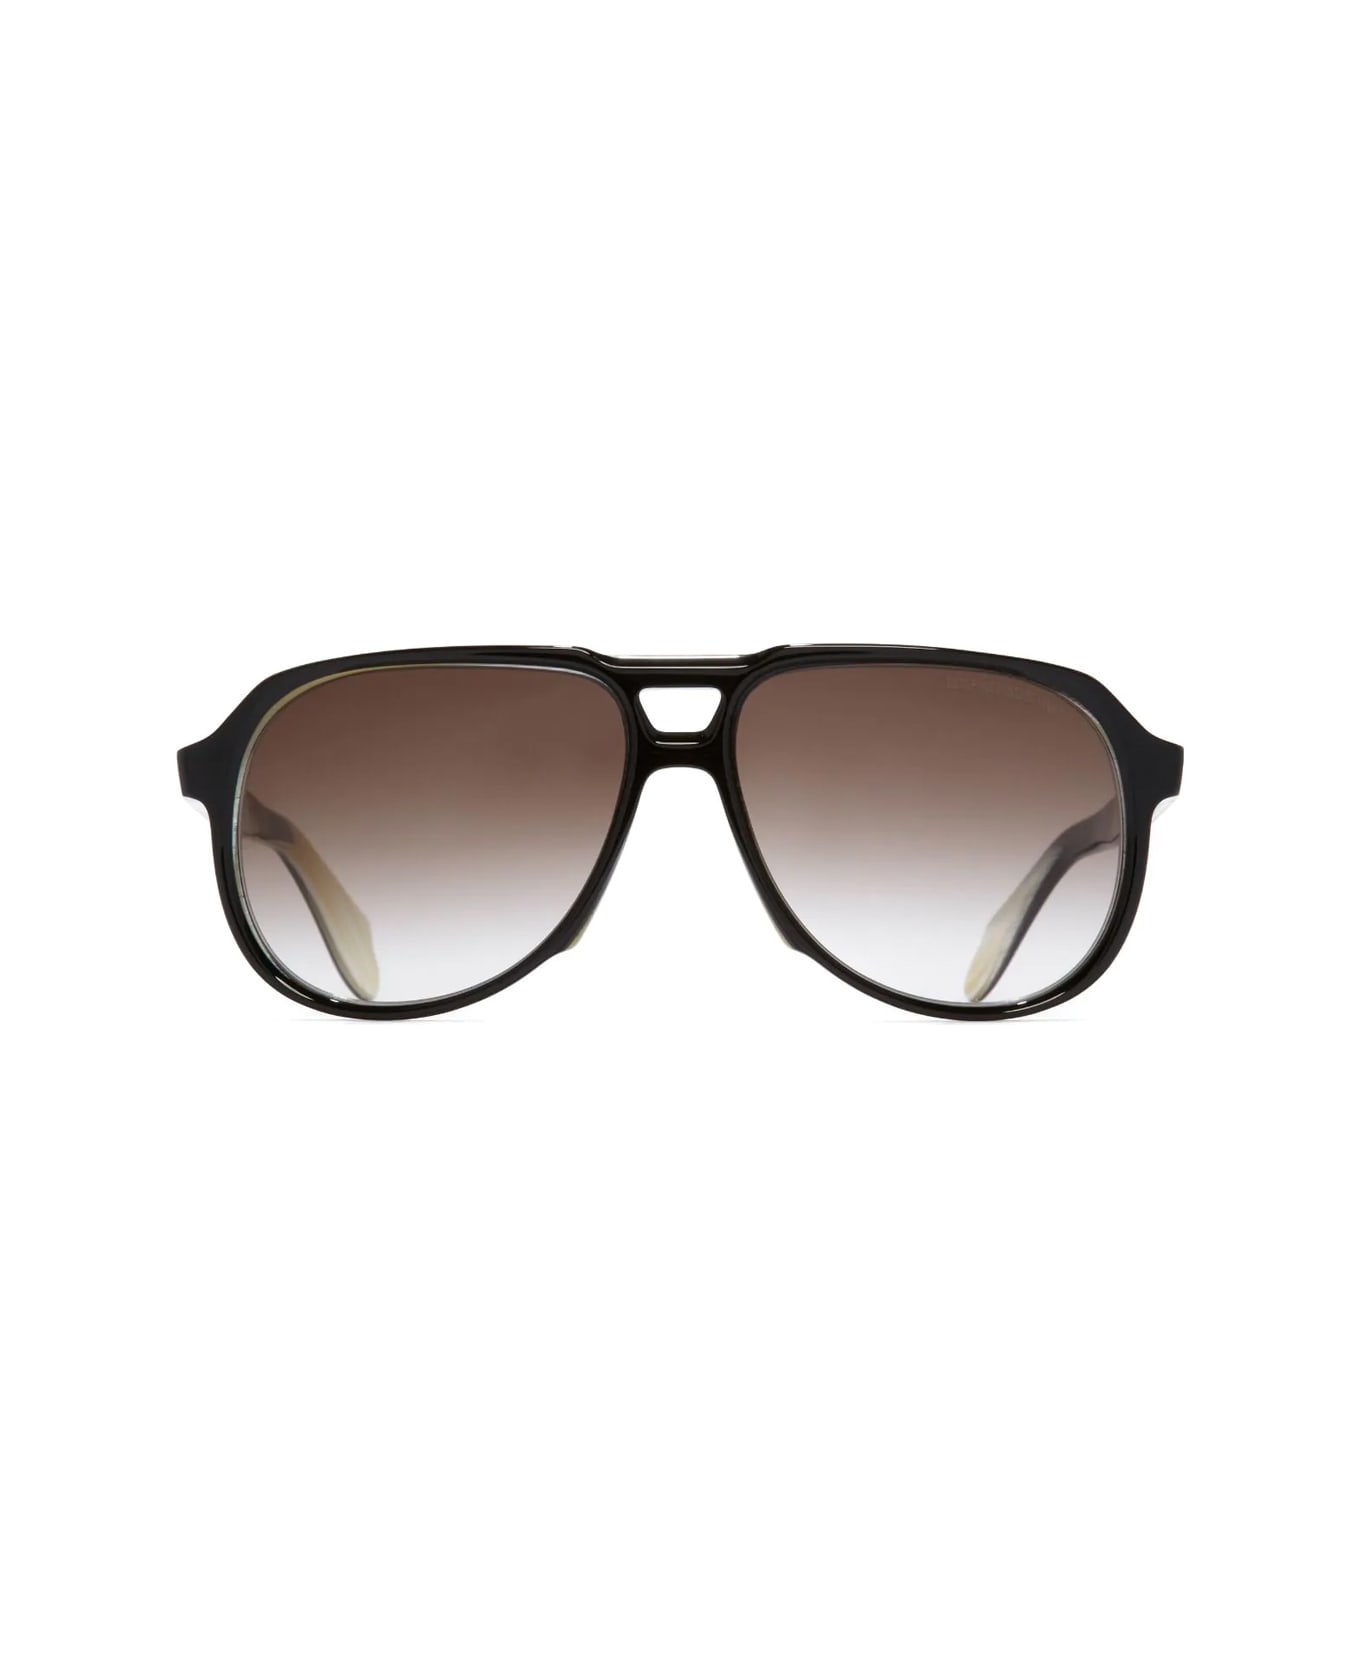 Cutler and Gross 9782 02 Sunglasses - Nero